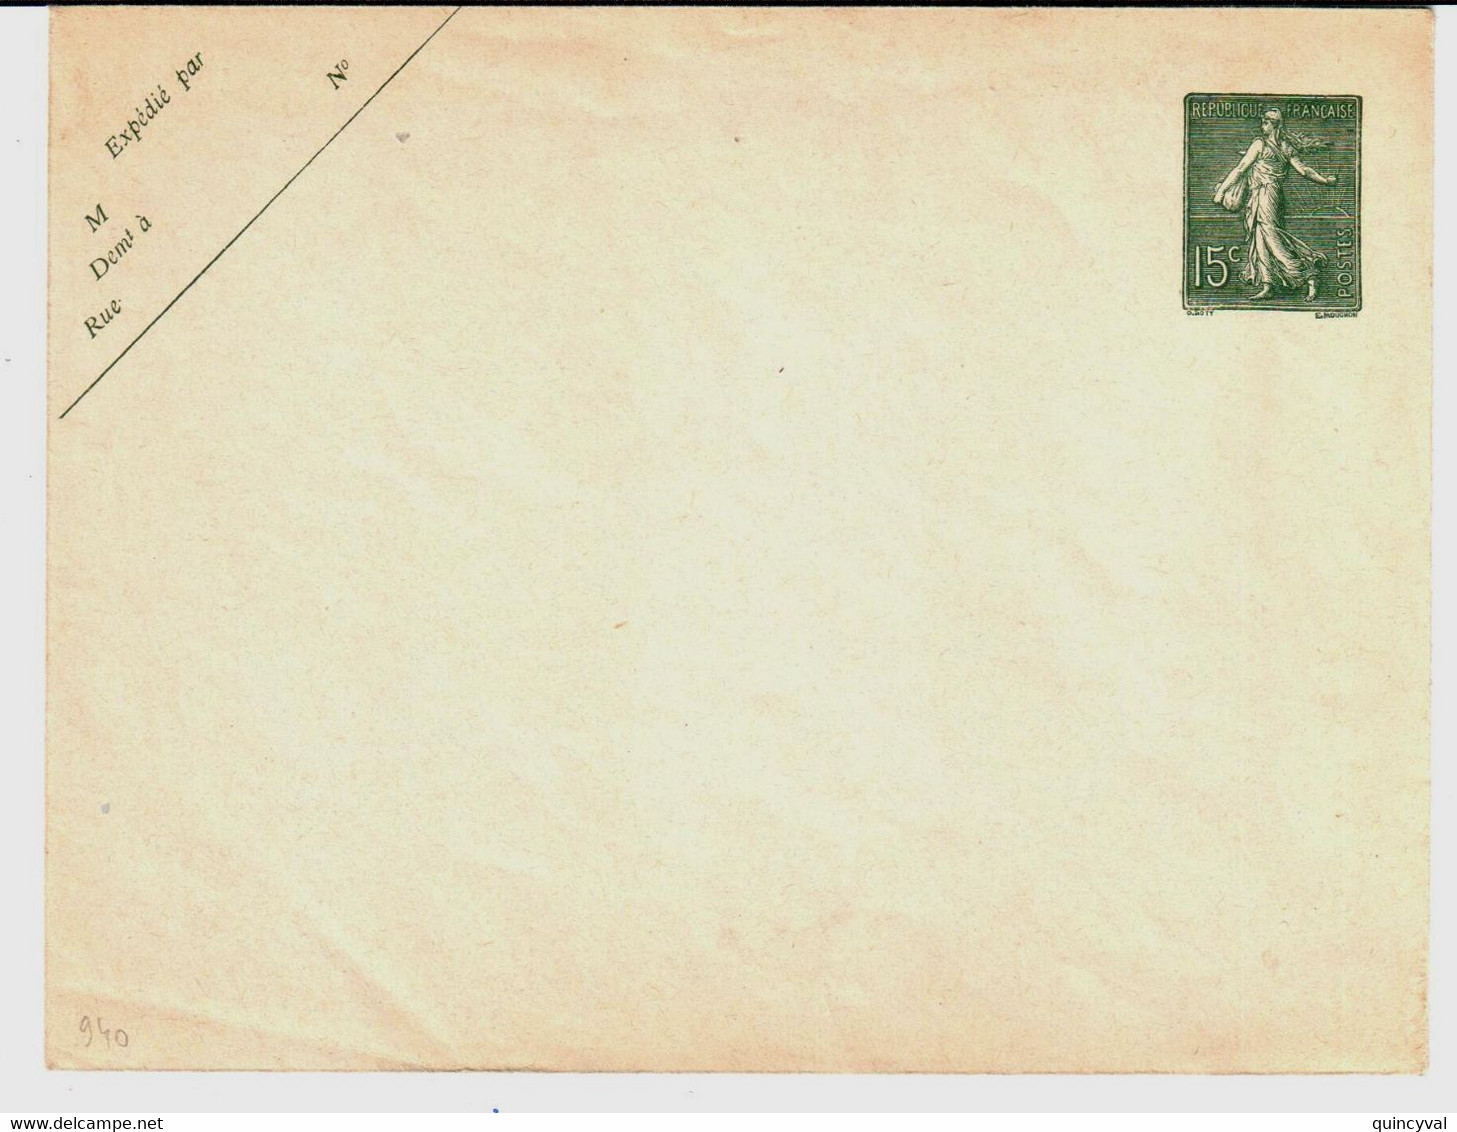 Enveloppe Entier Postal 15c Semeuse Lignée Vert Date 940 Yv 130-E9 Storch B19a Format 147x112 - Sobres Tipos Y TSC (antes De 1995)